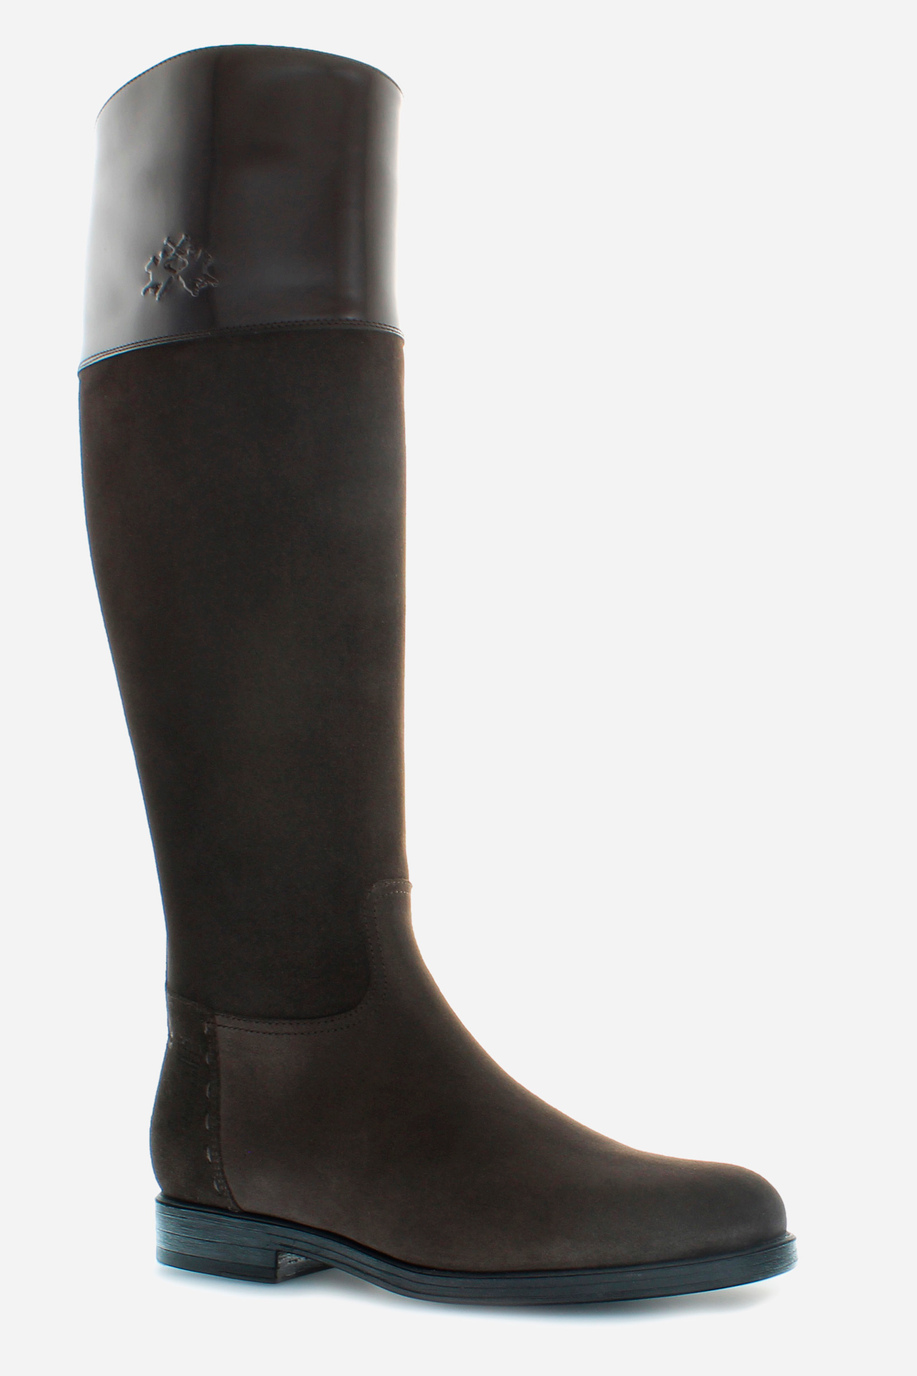 Women’s equestrian style boot in suede - Footwear | La Martina - Official Online Shop